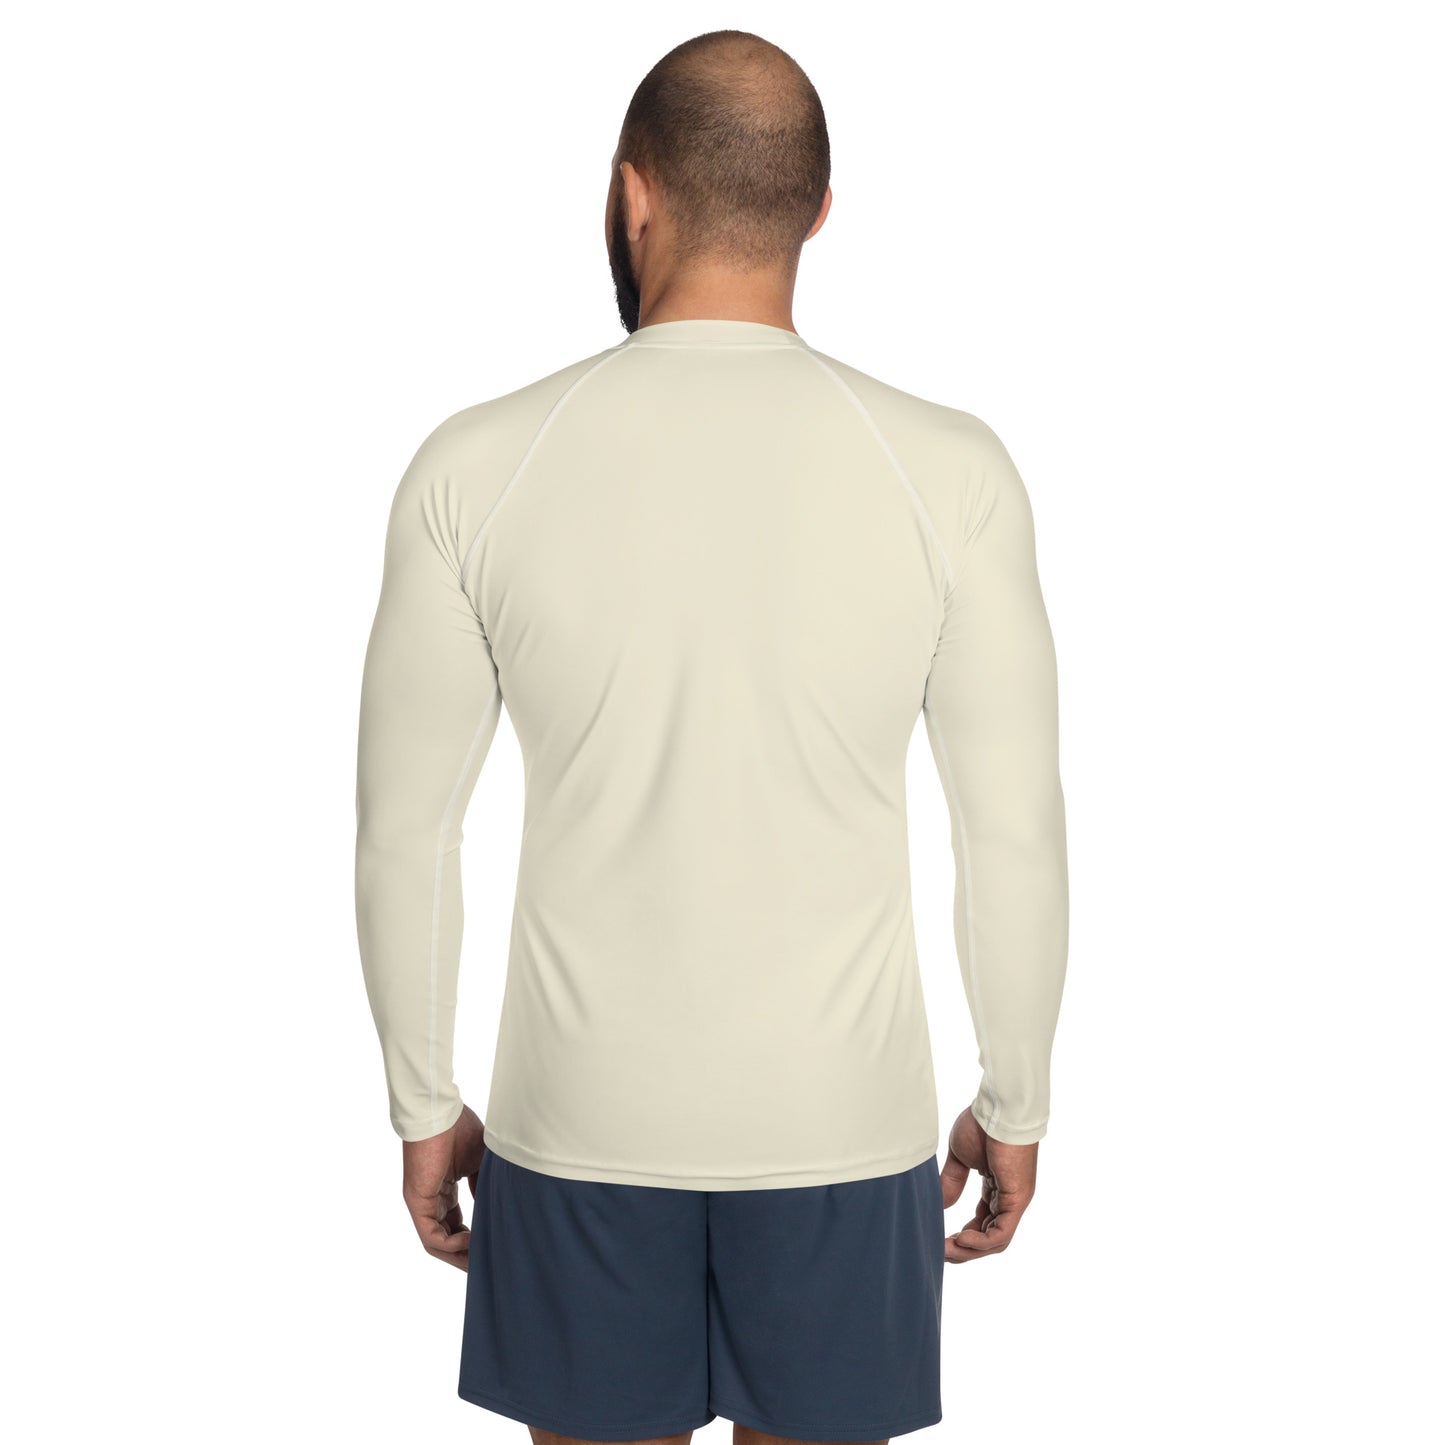 Humble Sportswear, men's color match rash guard, men's long sleeve compression shirts